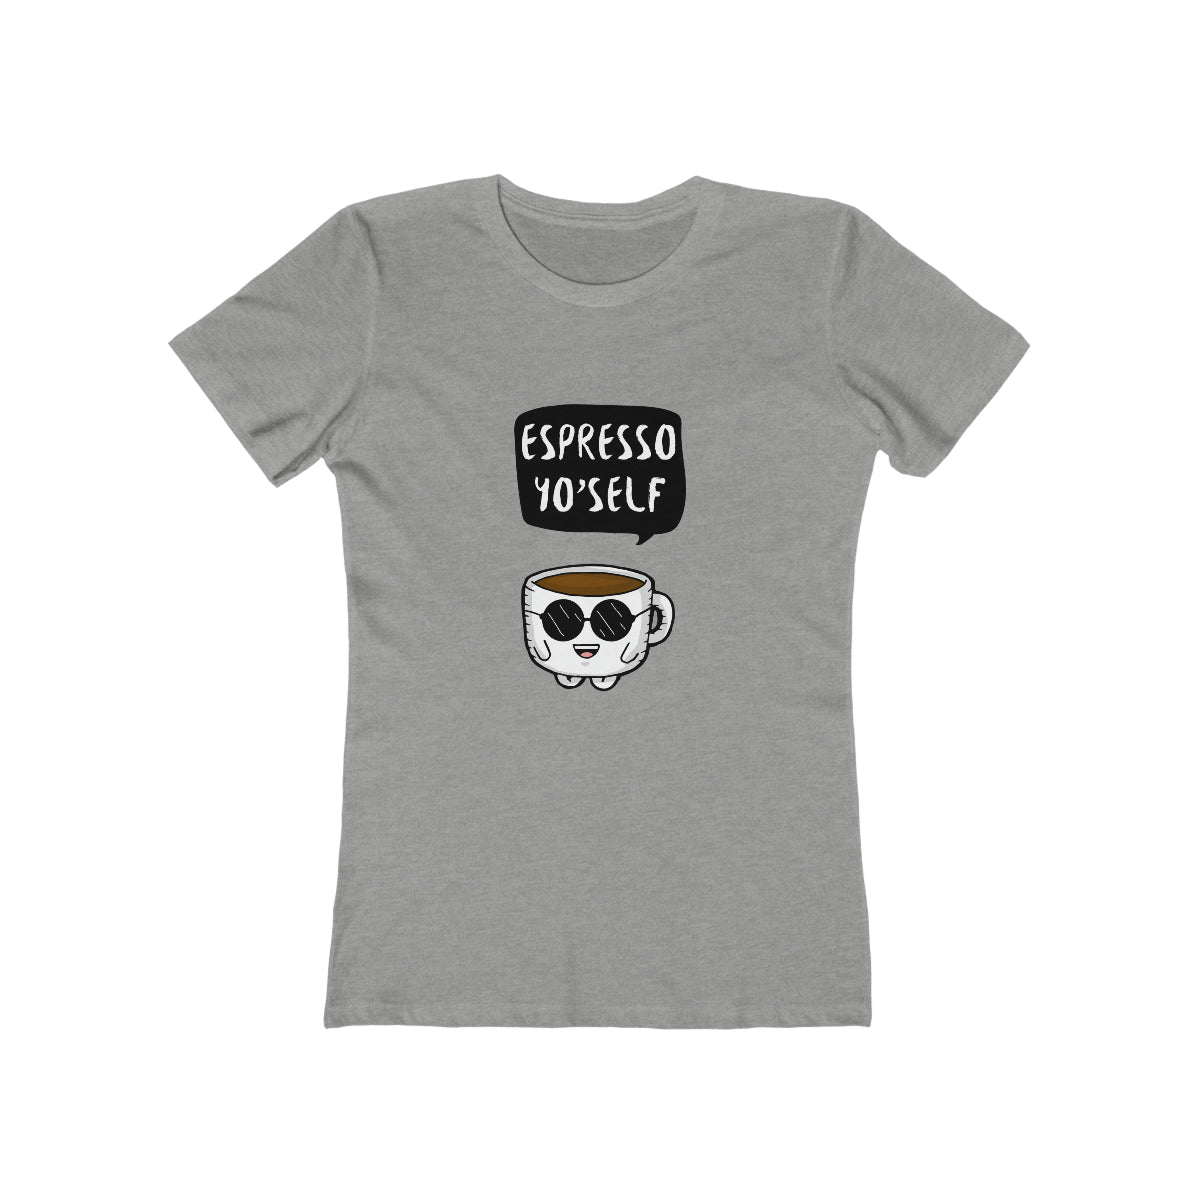 Espresso Yo'self - Women's T-shirt